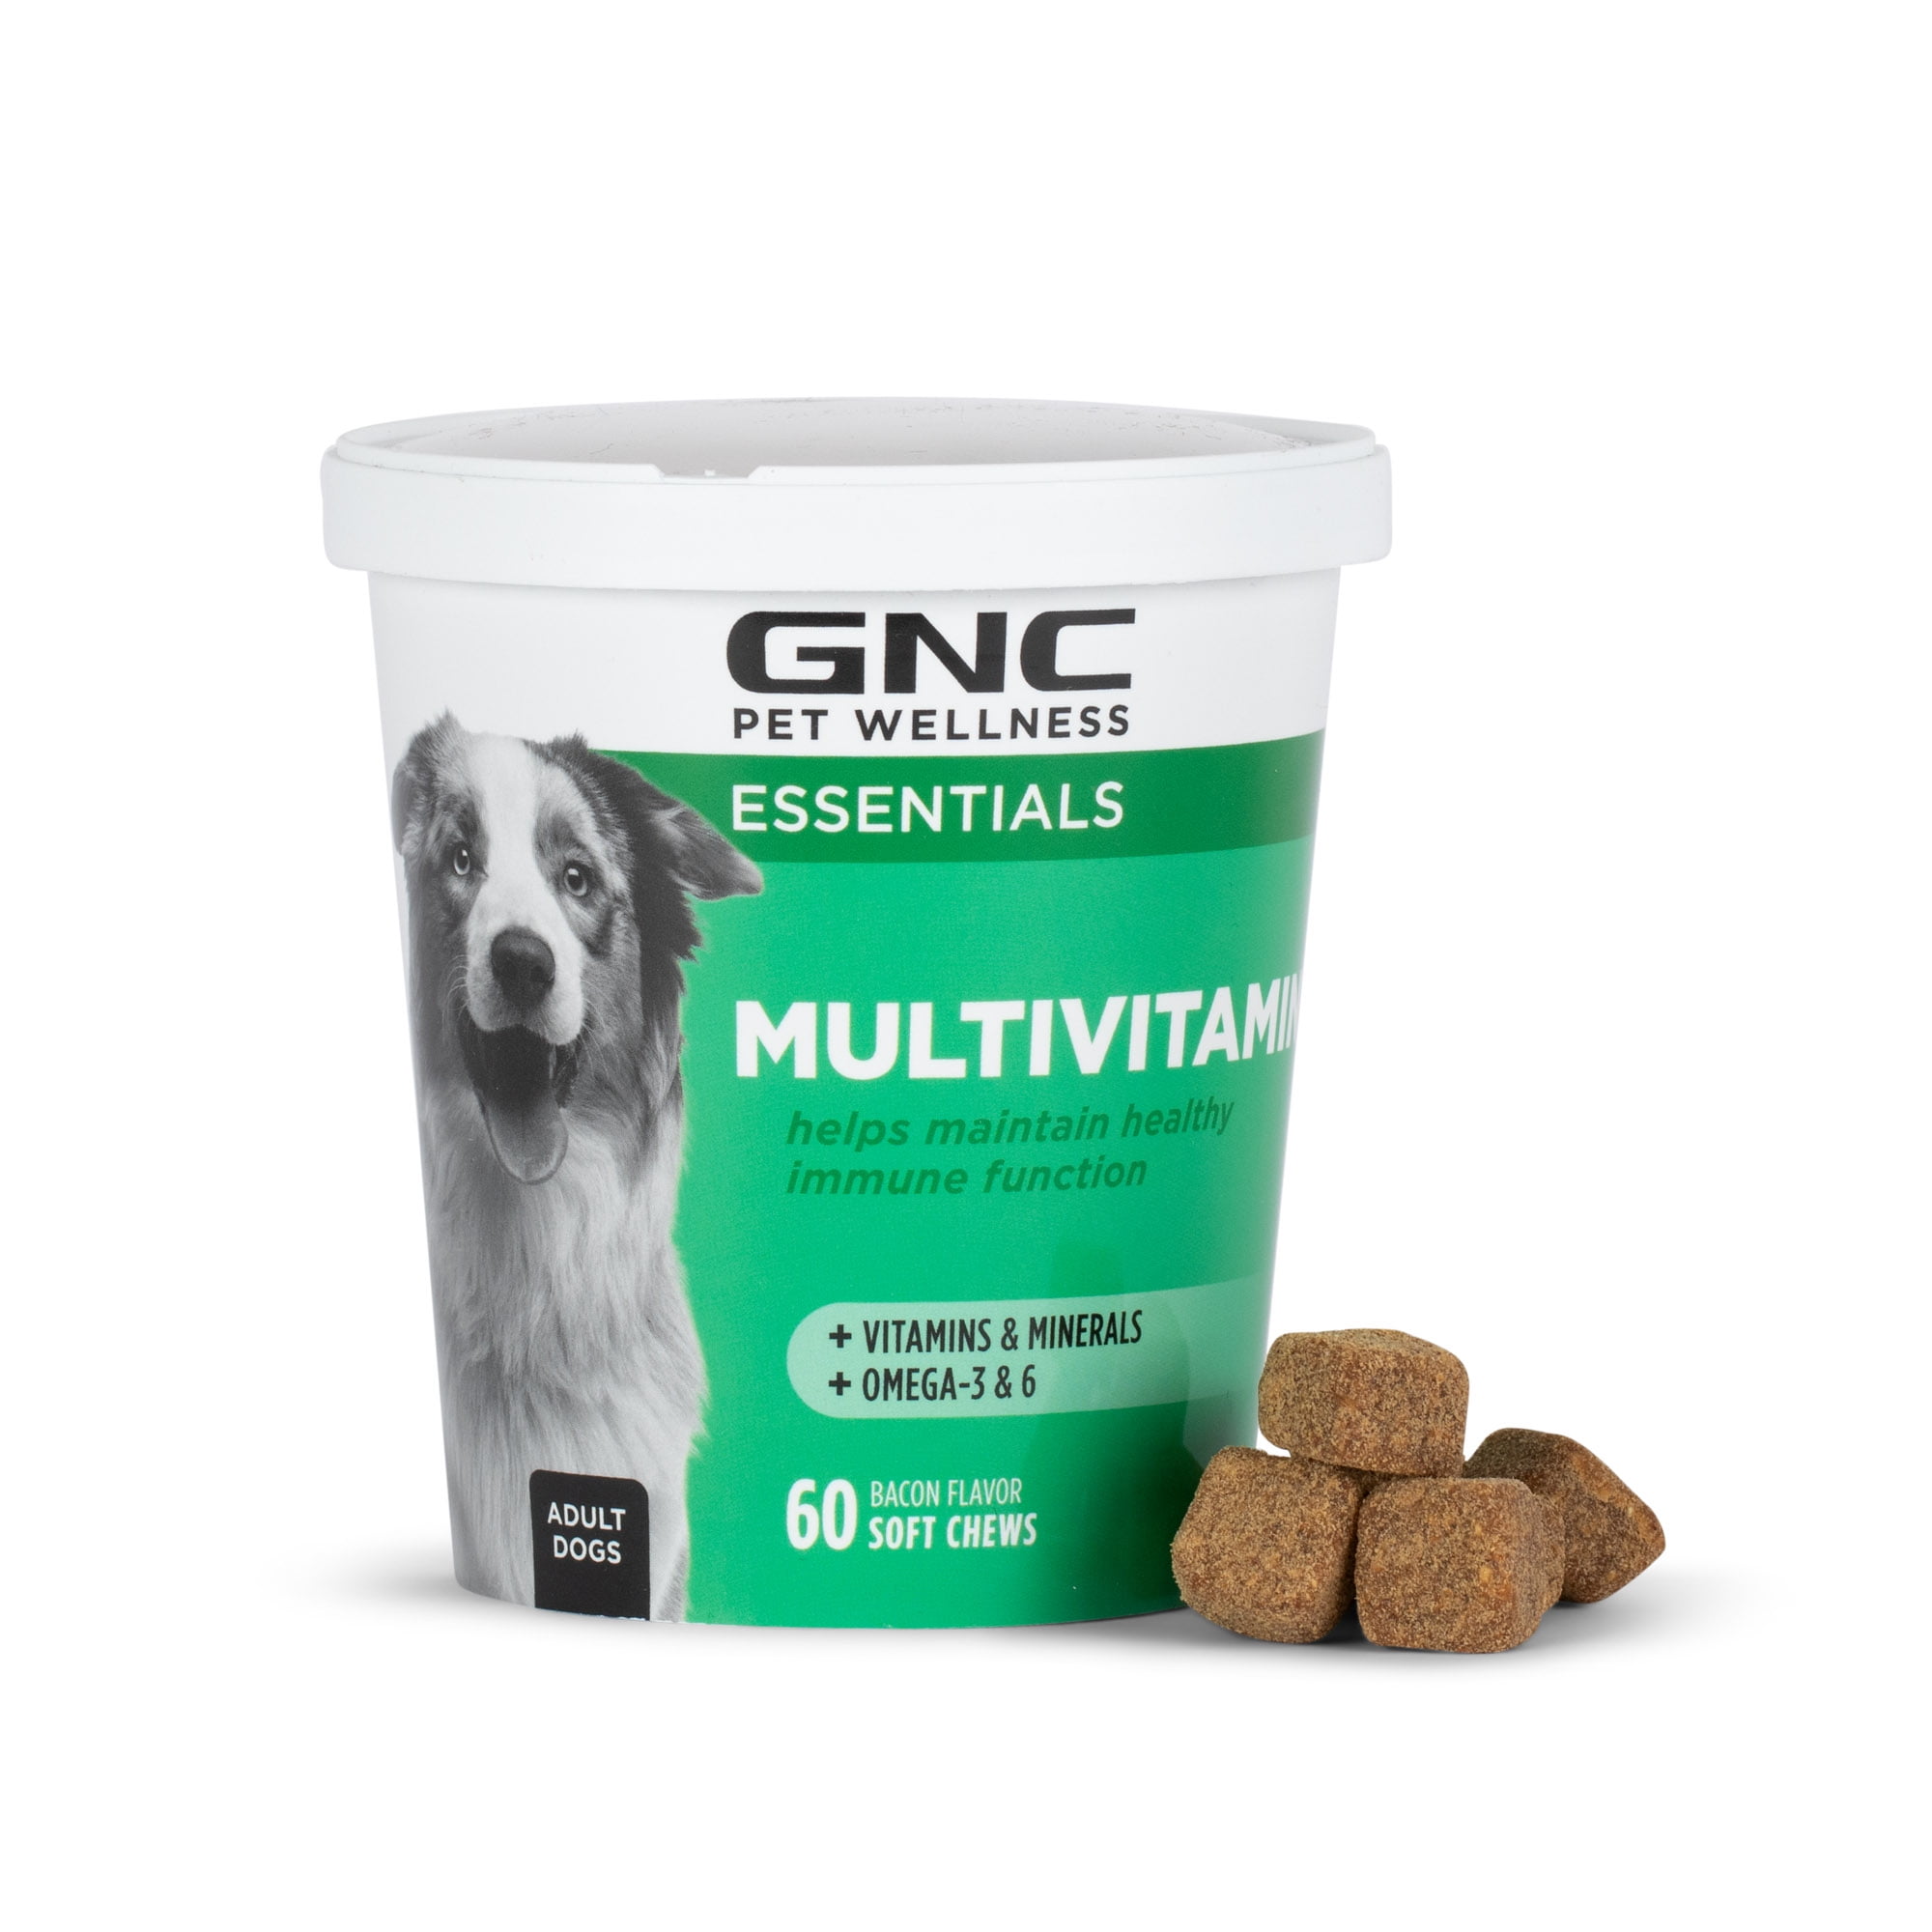 GNC Pet Wellness Essentials Dog Multivitamin Supplement, Soft Chews